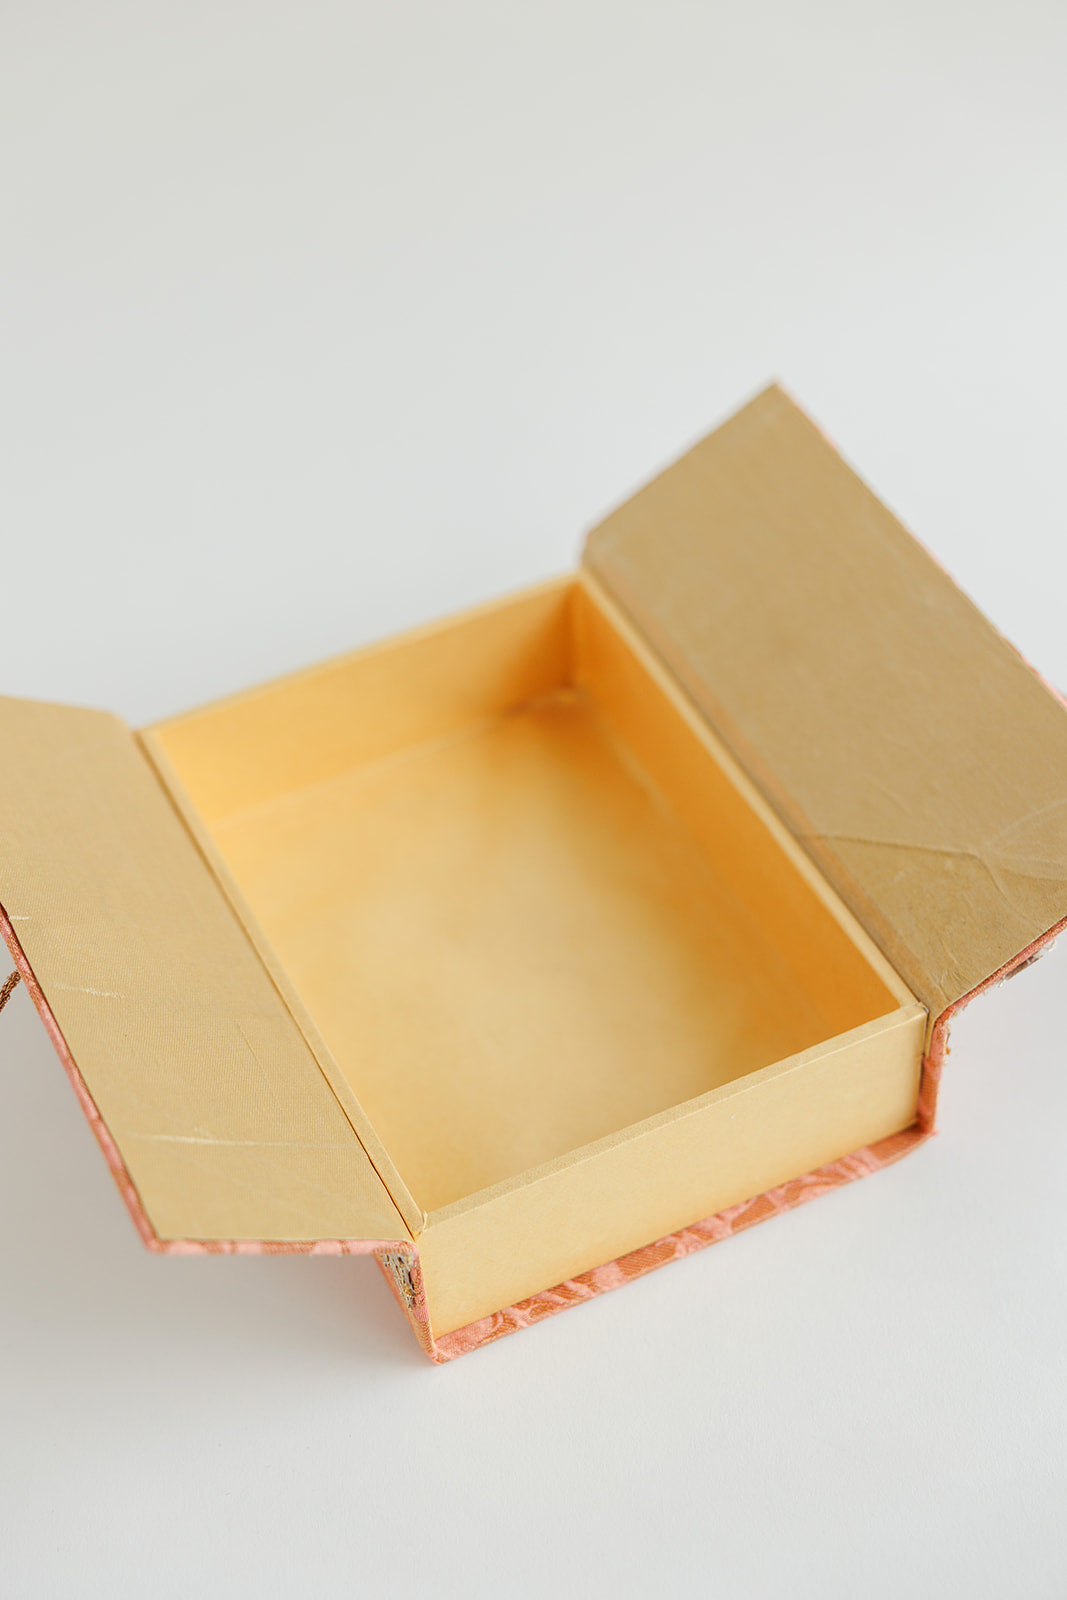 Laila Shagan Gift Box